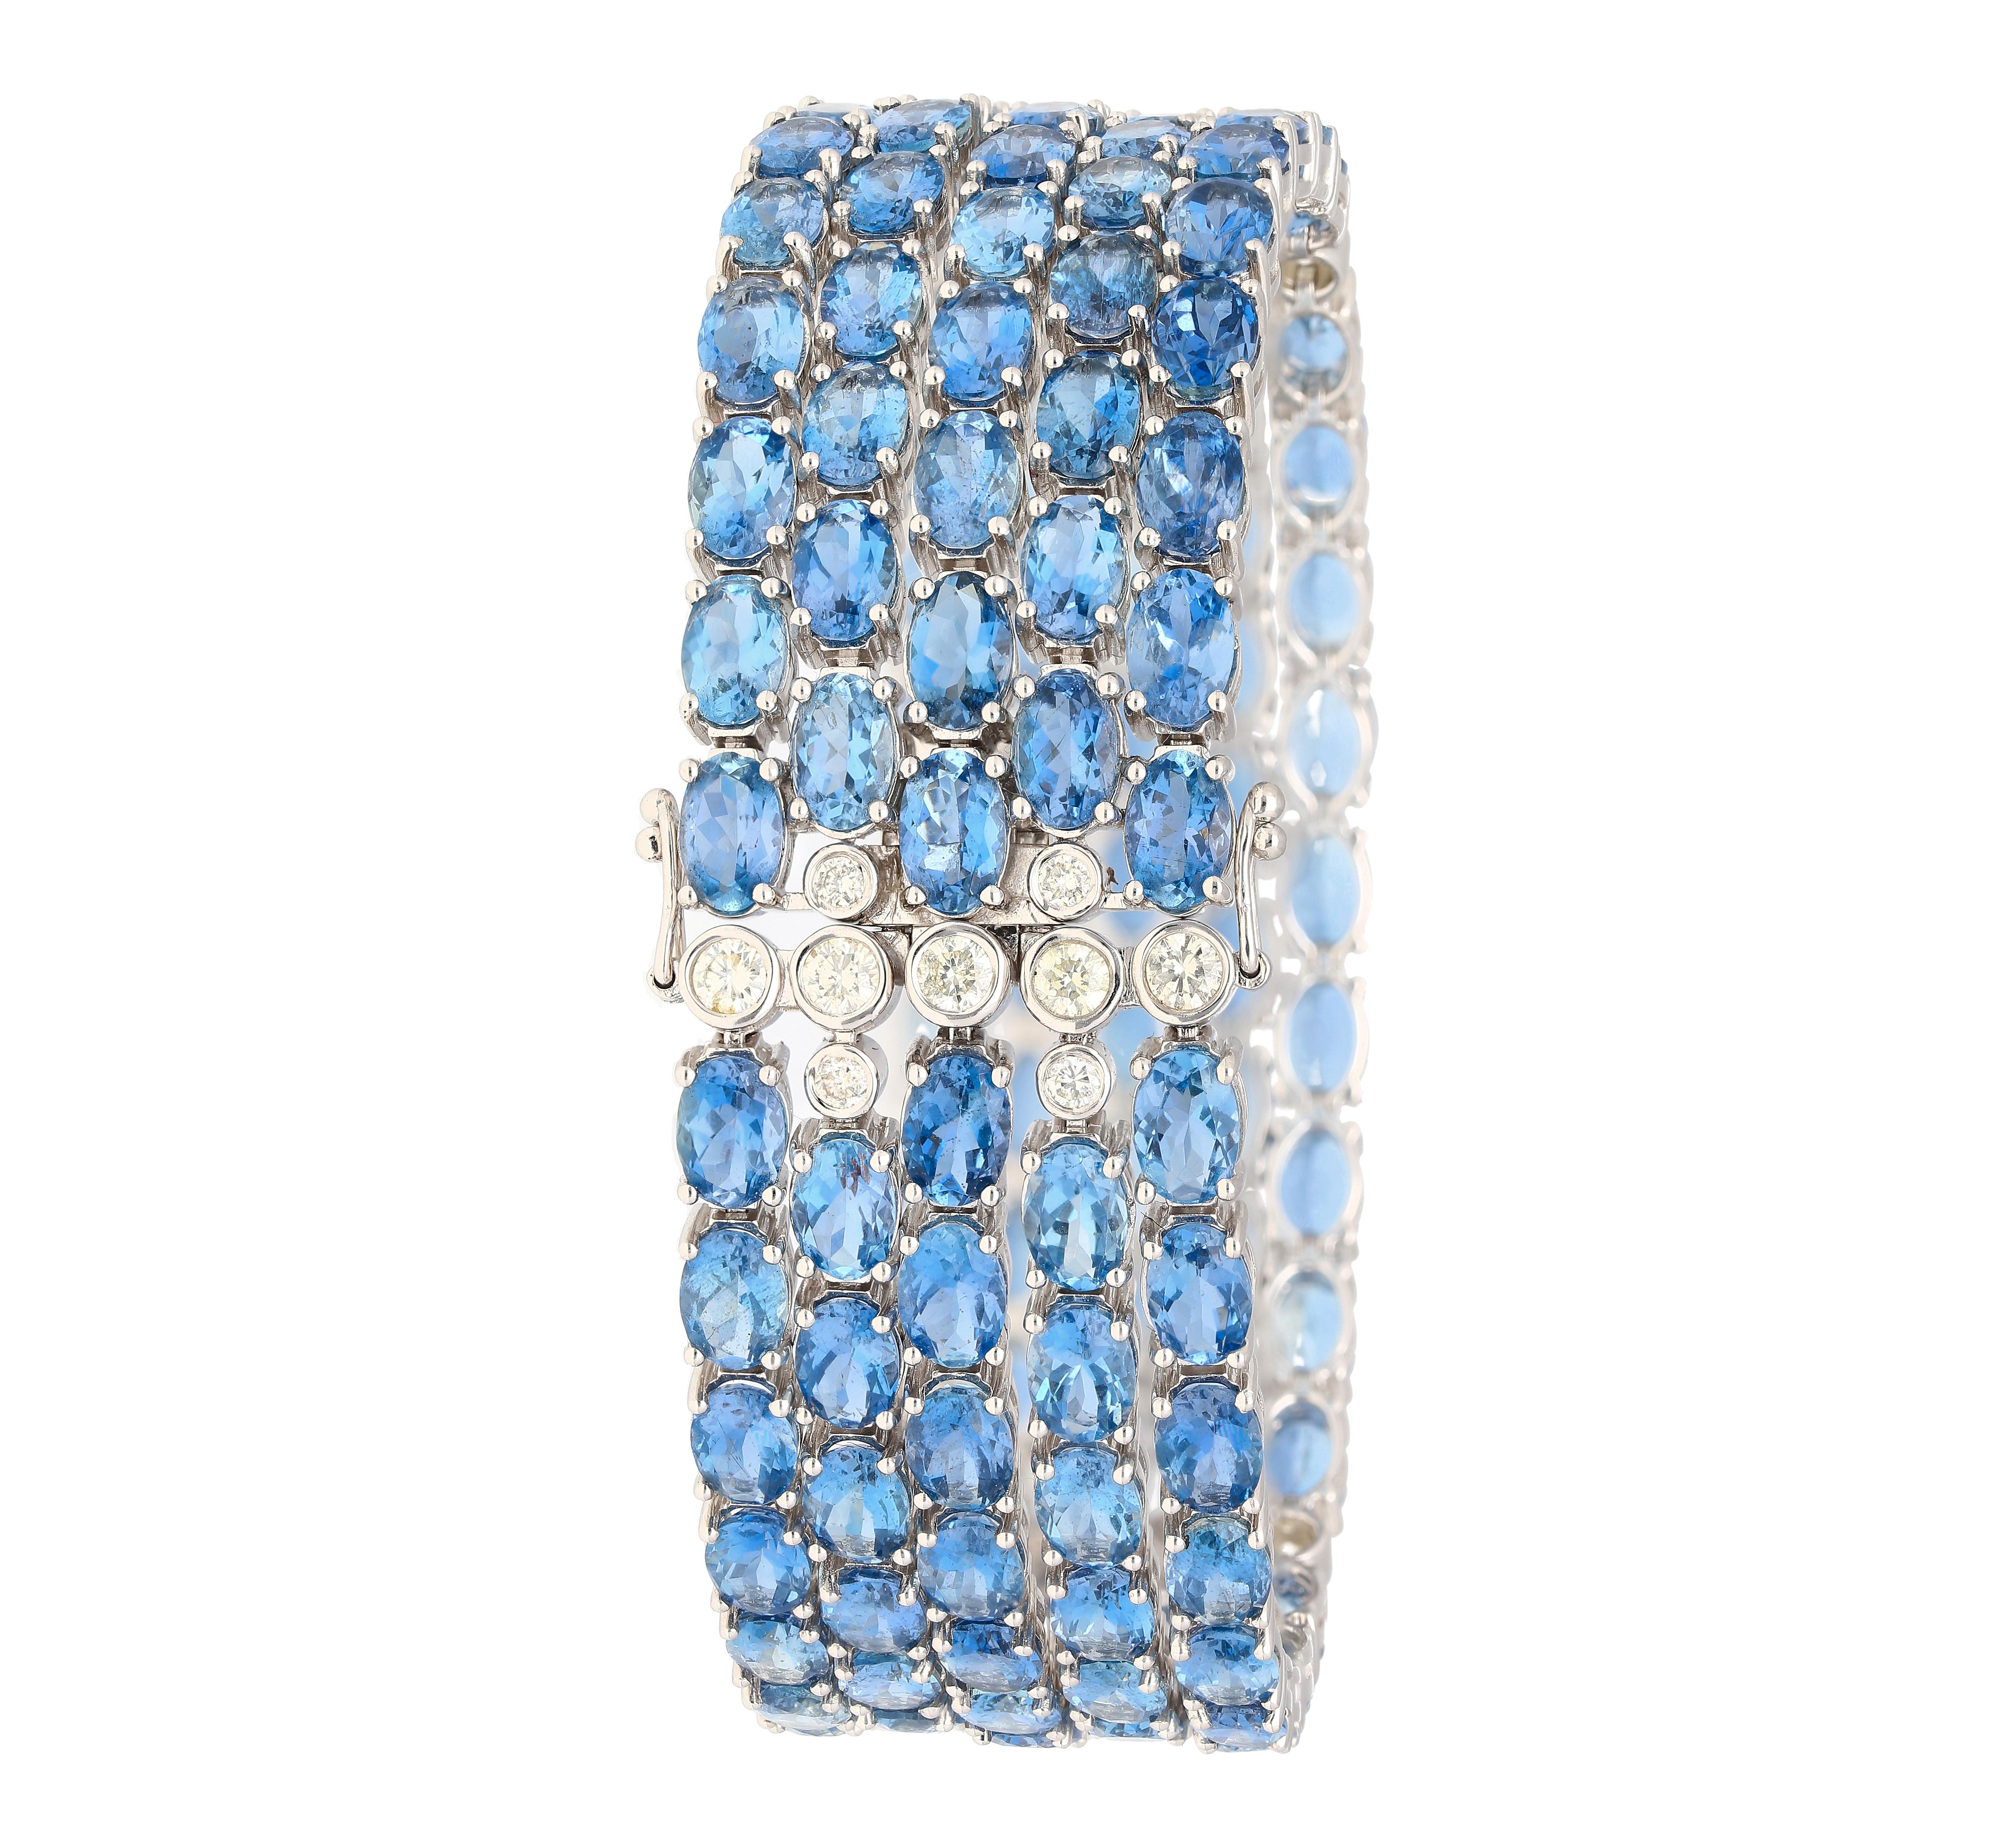 53 Carat Oval Cut Aquamarine and Diamond Multi Row Tennis Bracelet in White Gold For Sale 5